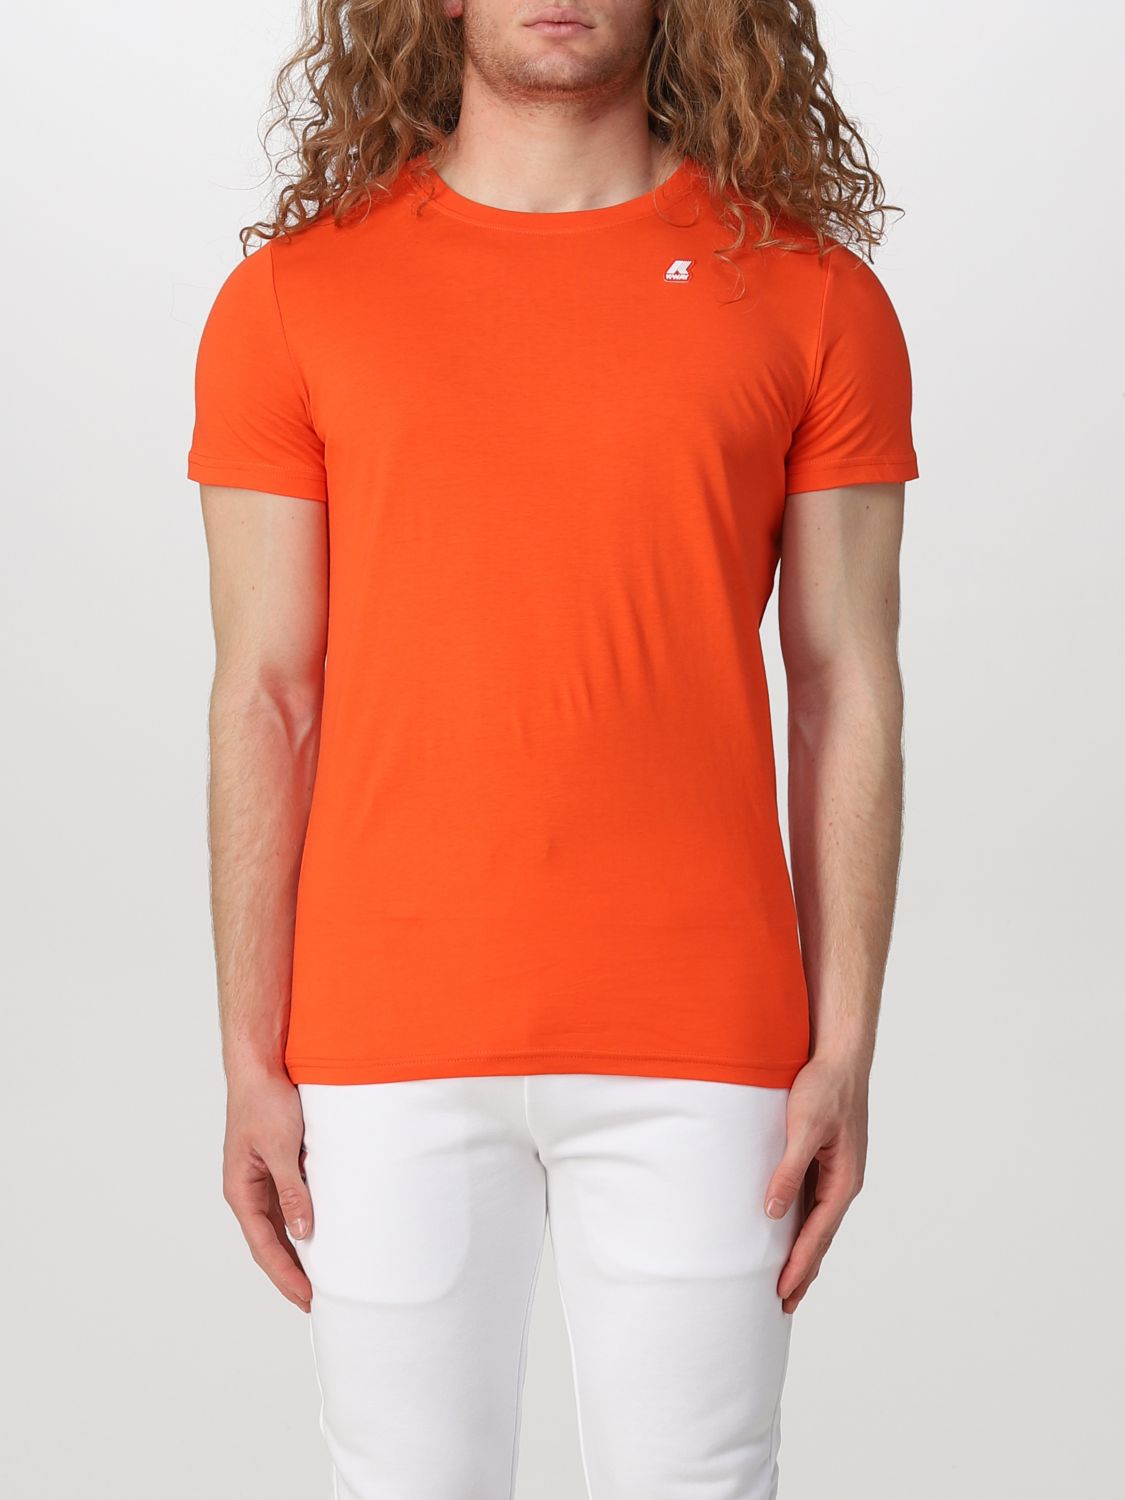 Camiseta K-Way: Camiseta hombre K-way naranja 1